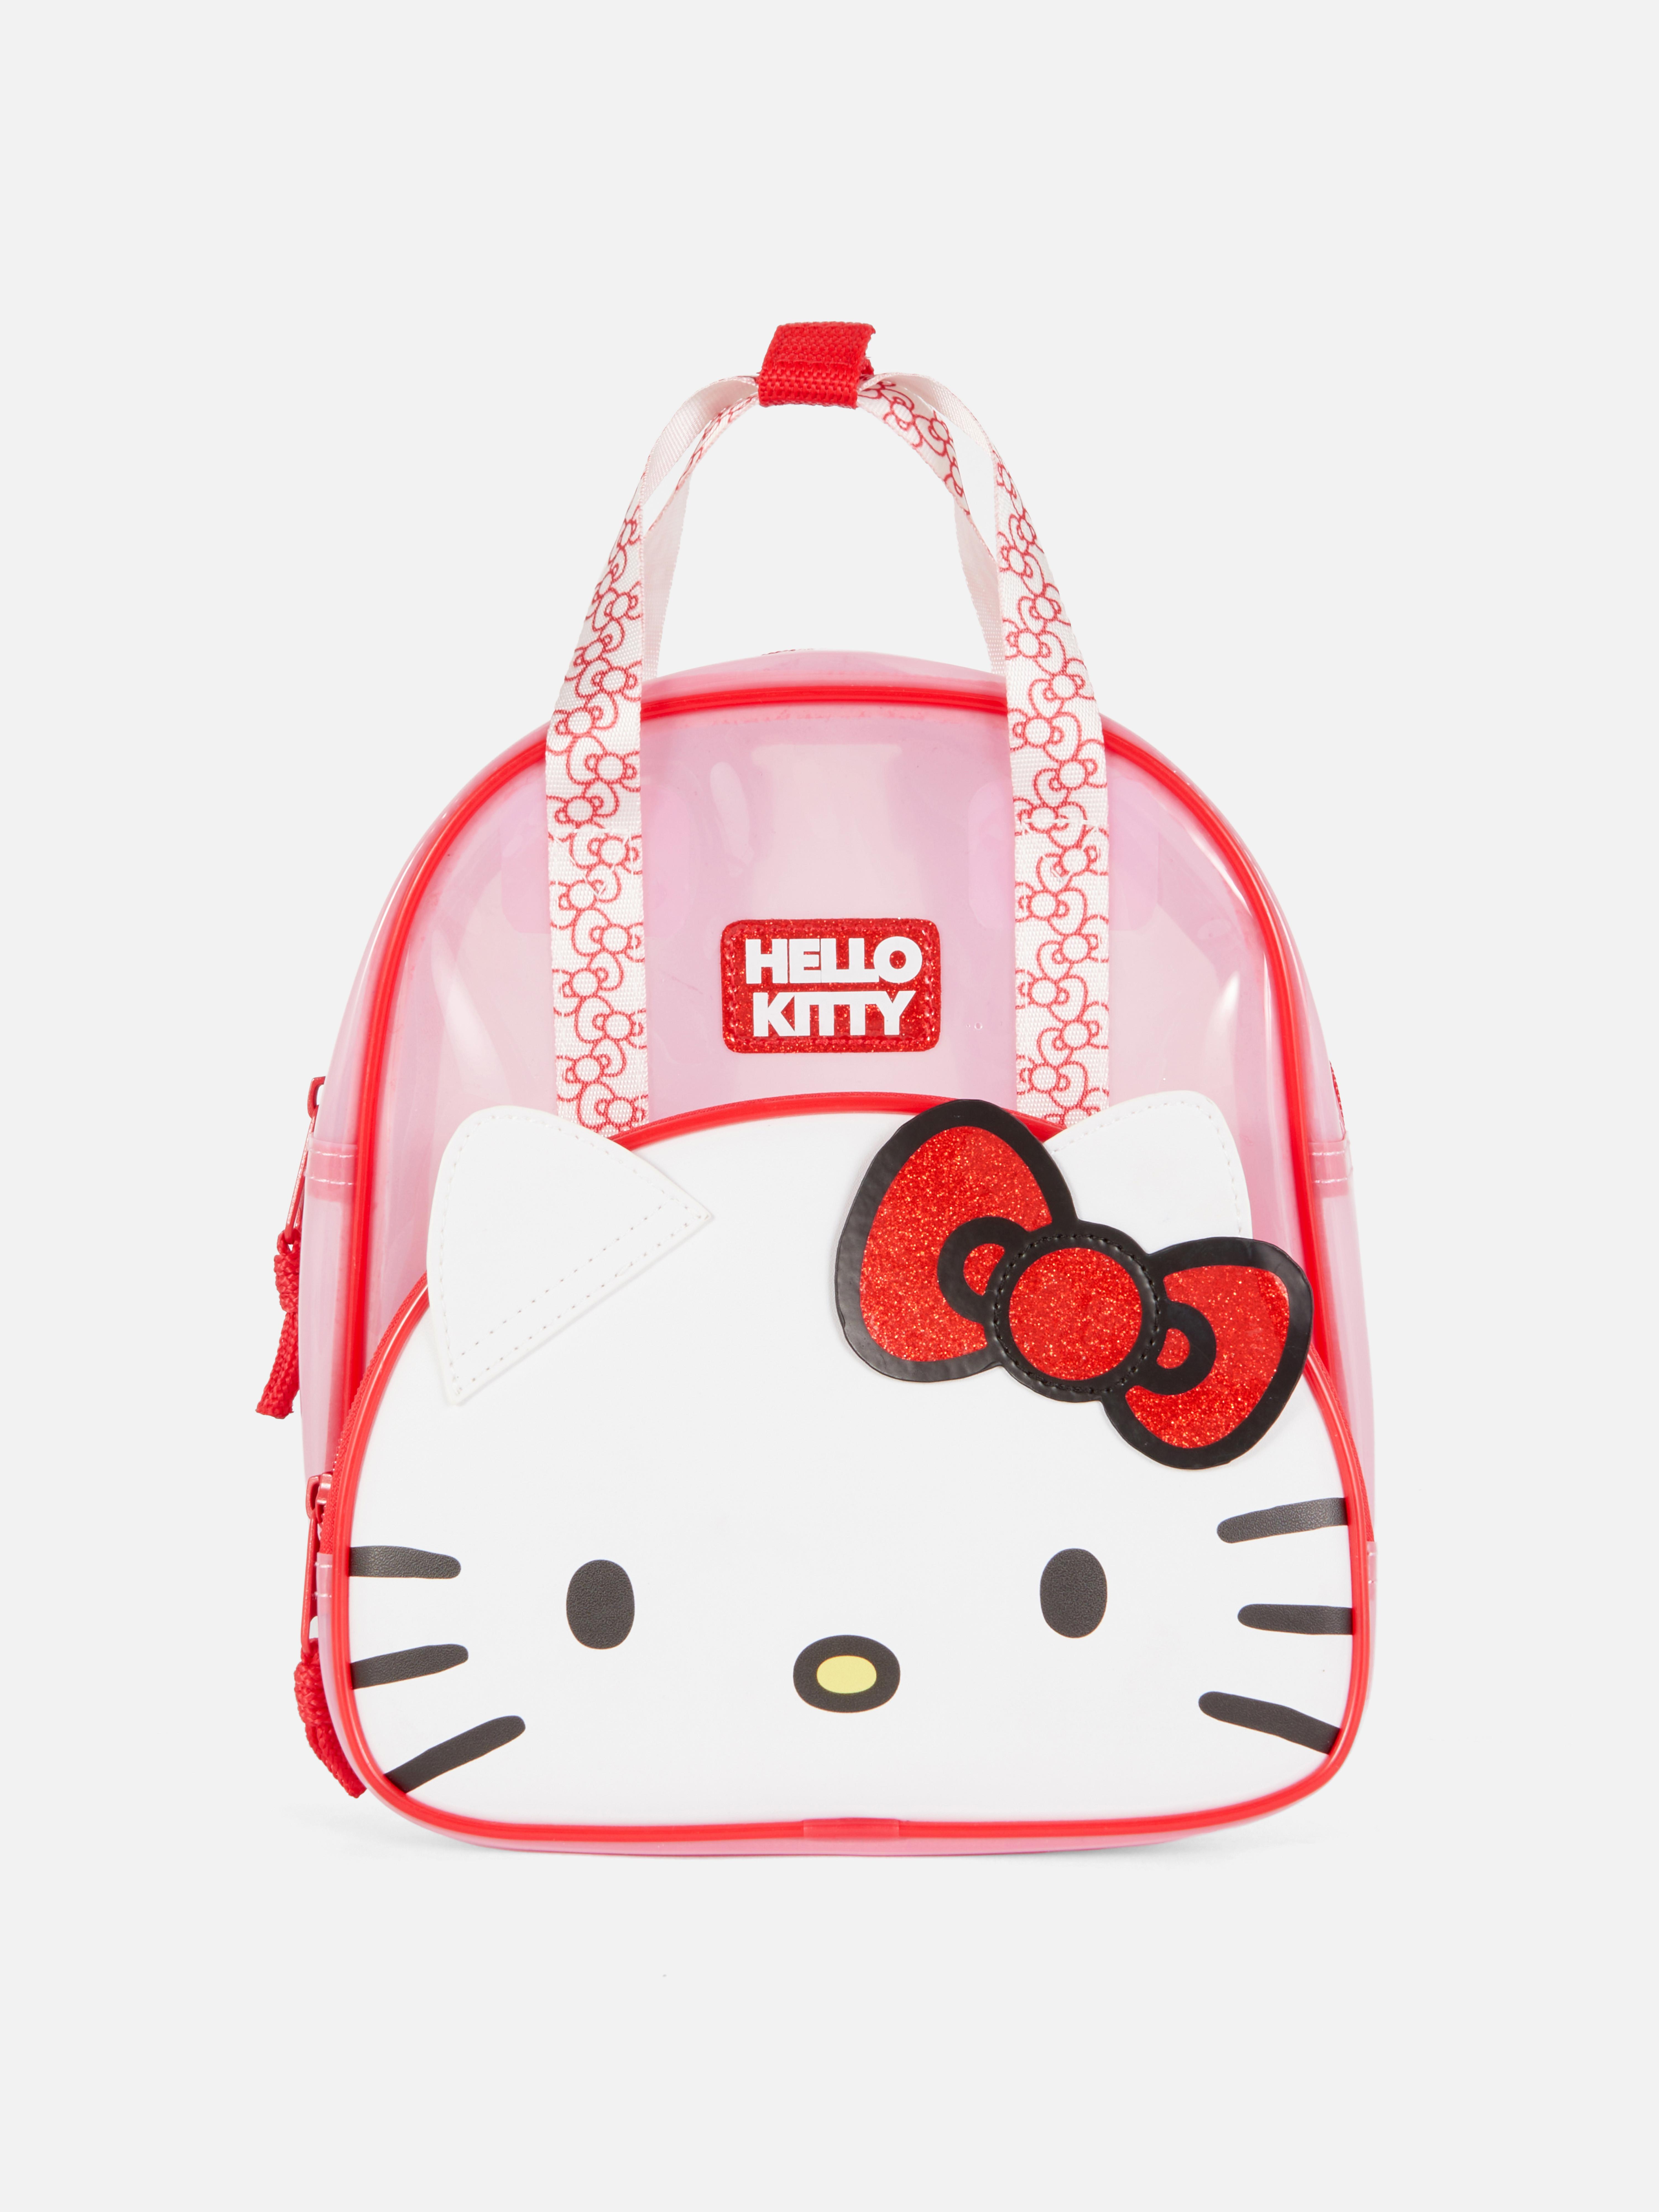 „Hello Kitty“ Rucksack zum 50. Jubiläum